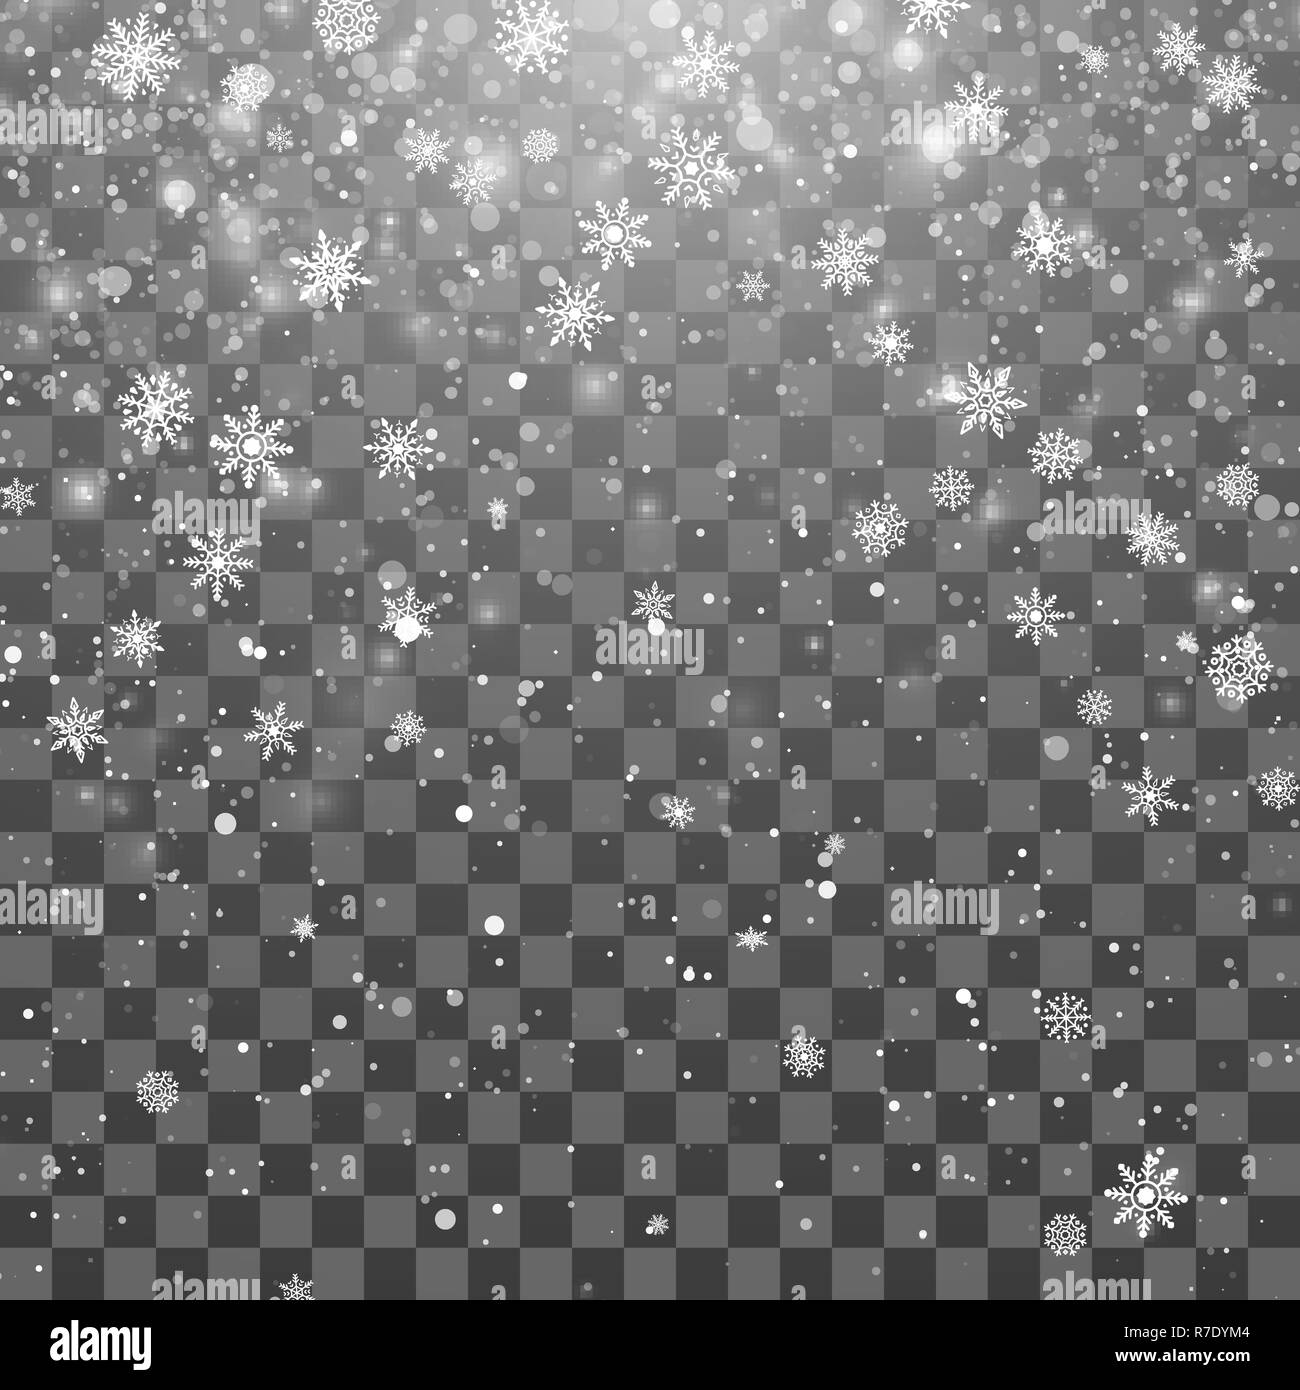 Snowflakes Confetti Falling Snow Vector Background Stock Vector